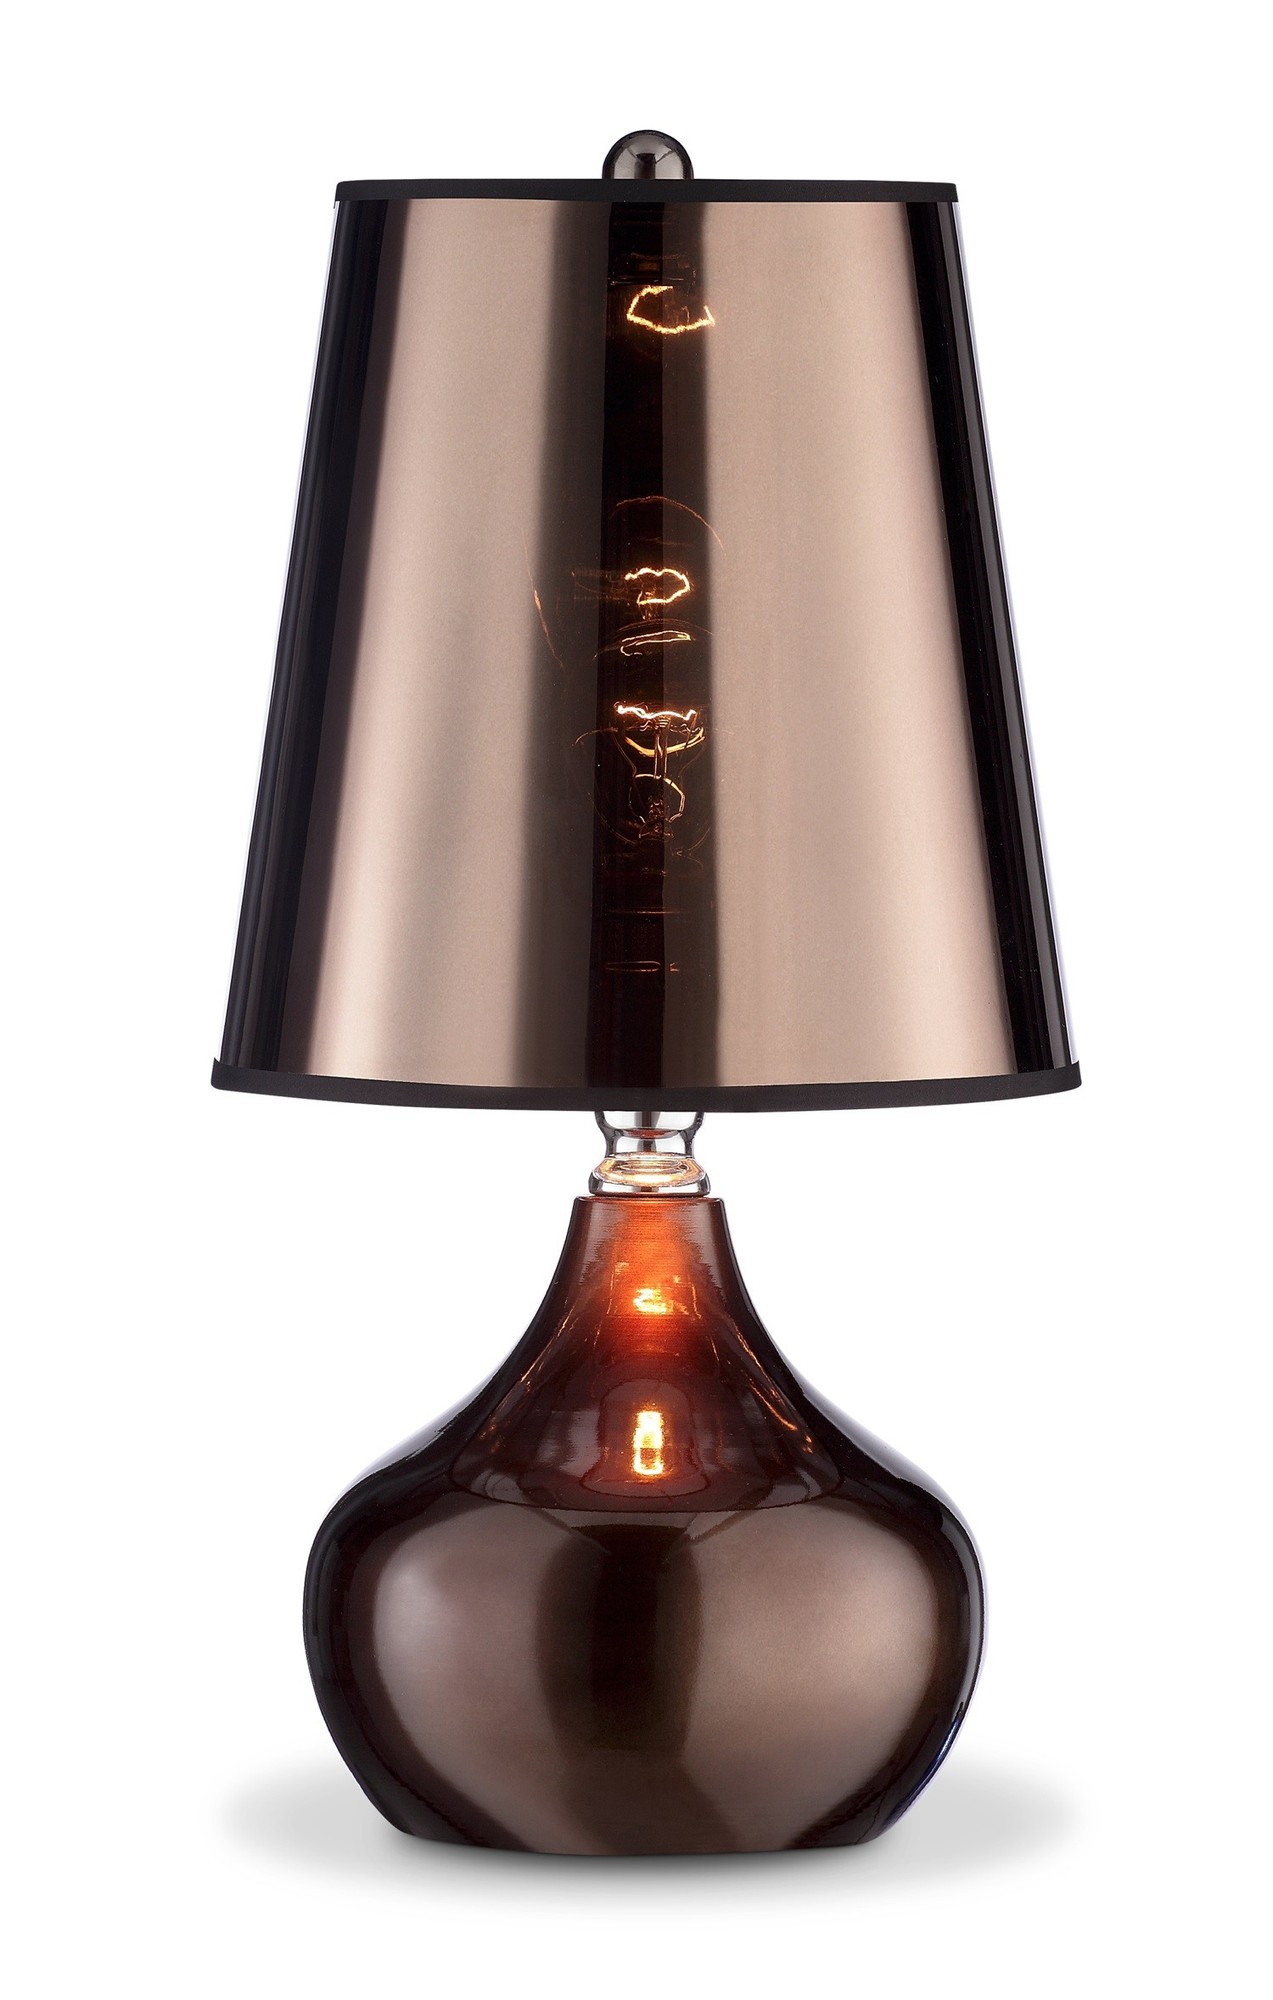 ContempoTransparent Luster Chocolate Table Lamp